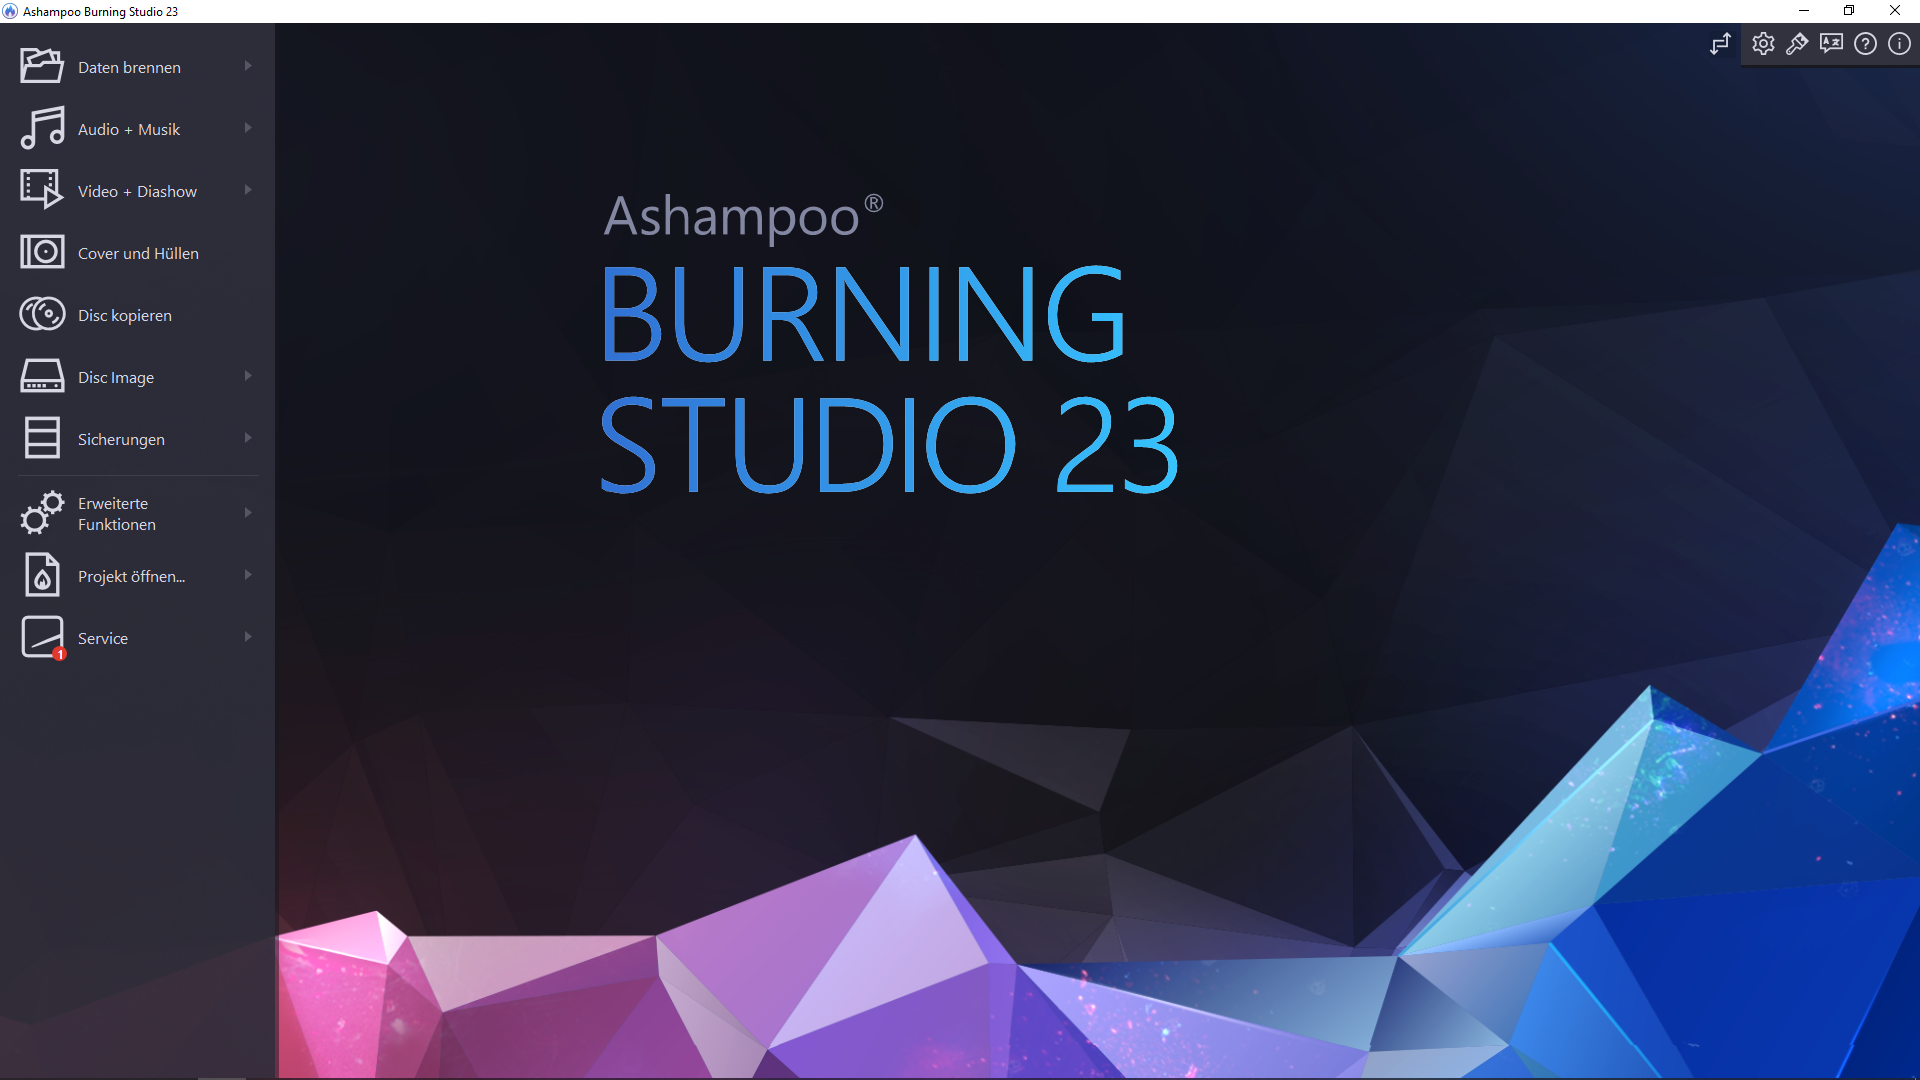 Ashampoo - Burning Studio 23 - Start - dark - vertical